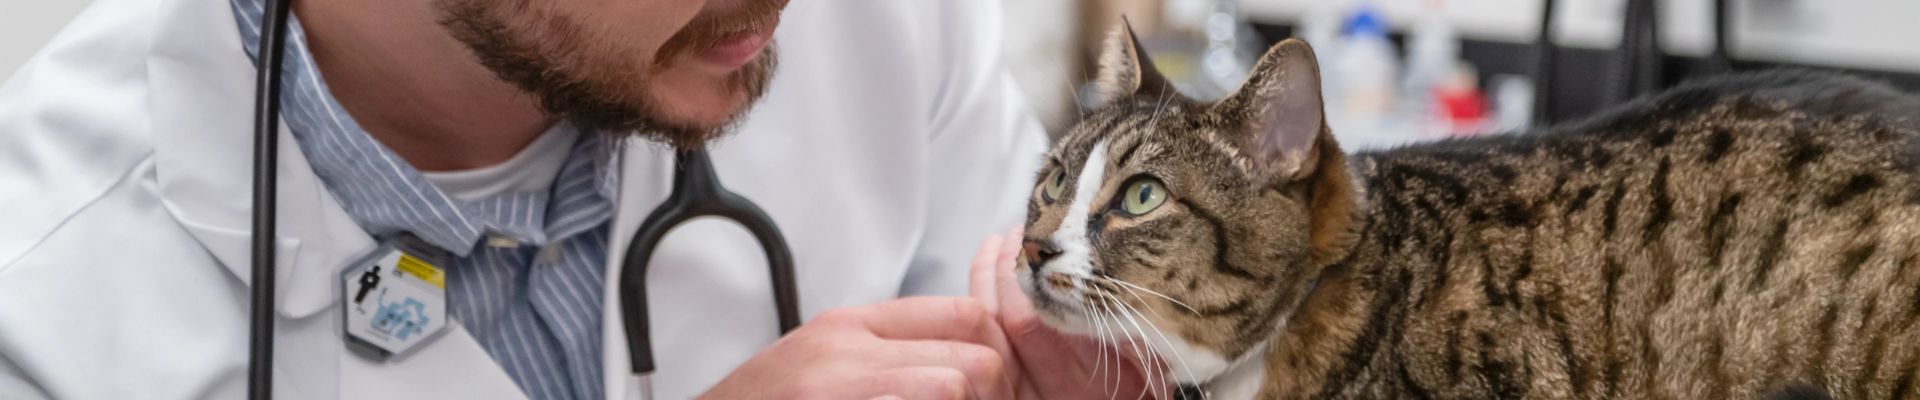 male veterinarian checks cat